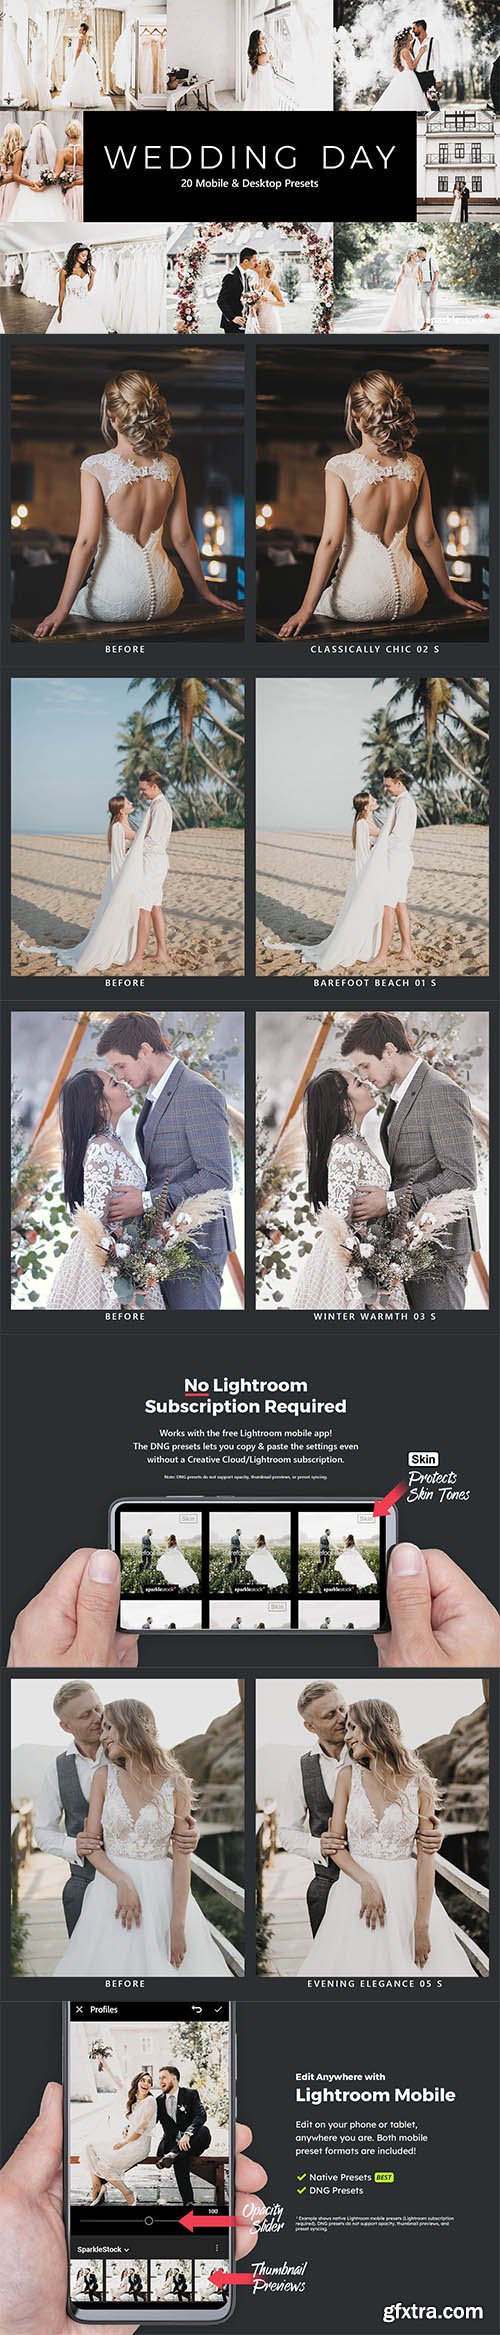 20 Wedding Day Lightroom Presets & LUTs